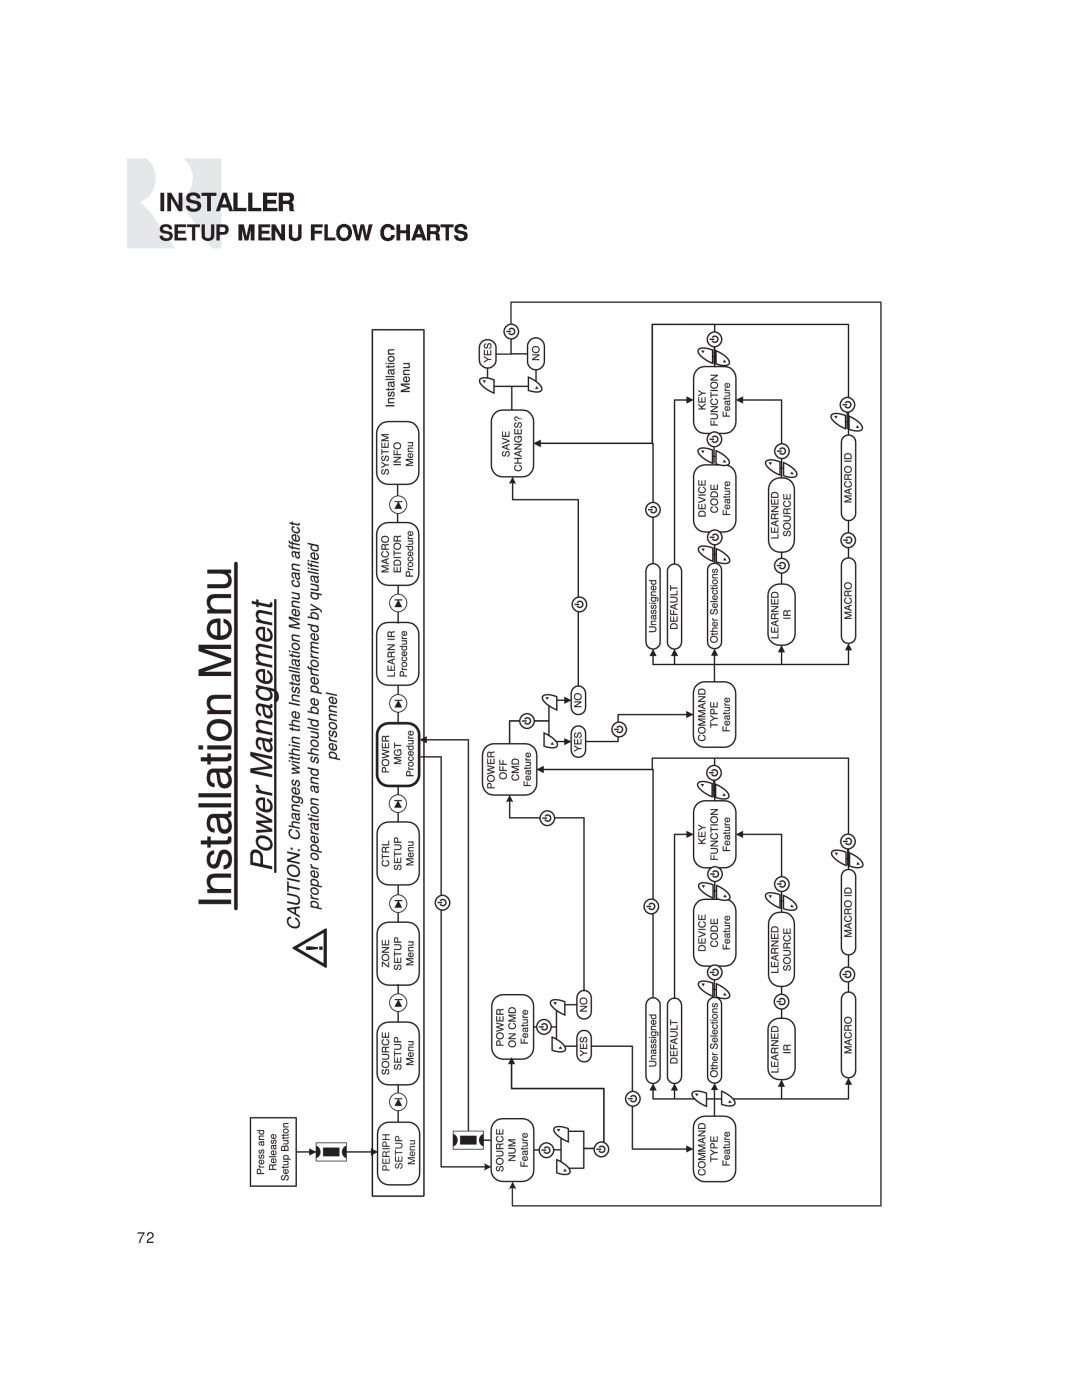 Russound CAM6.6T-S1 instruction manual Installer, Setup Menu Flow Charts 